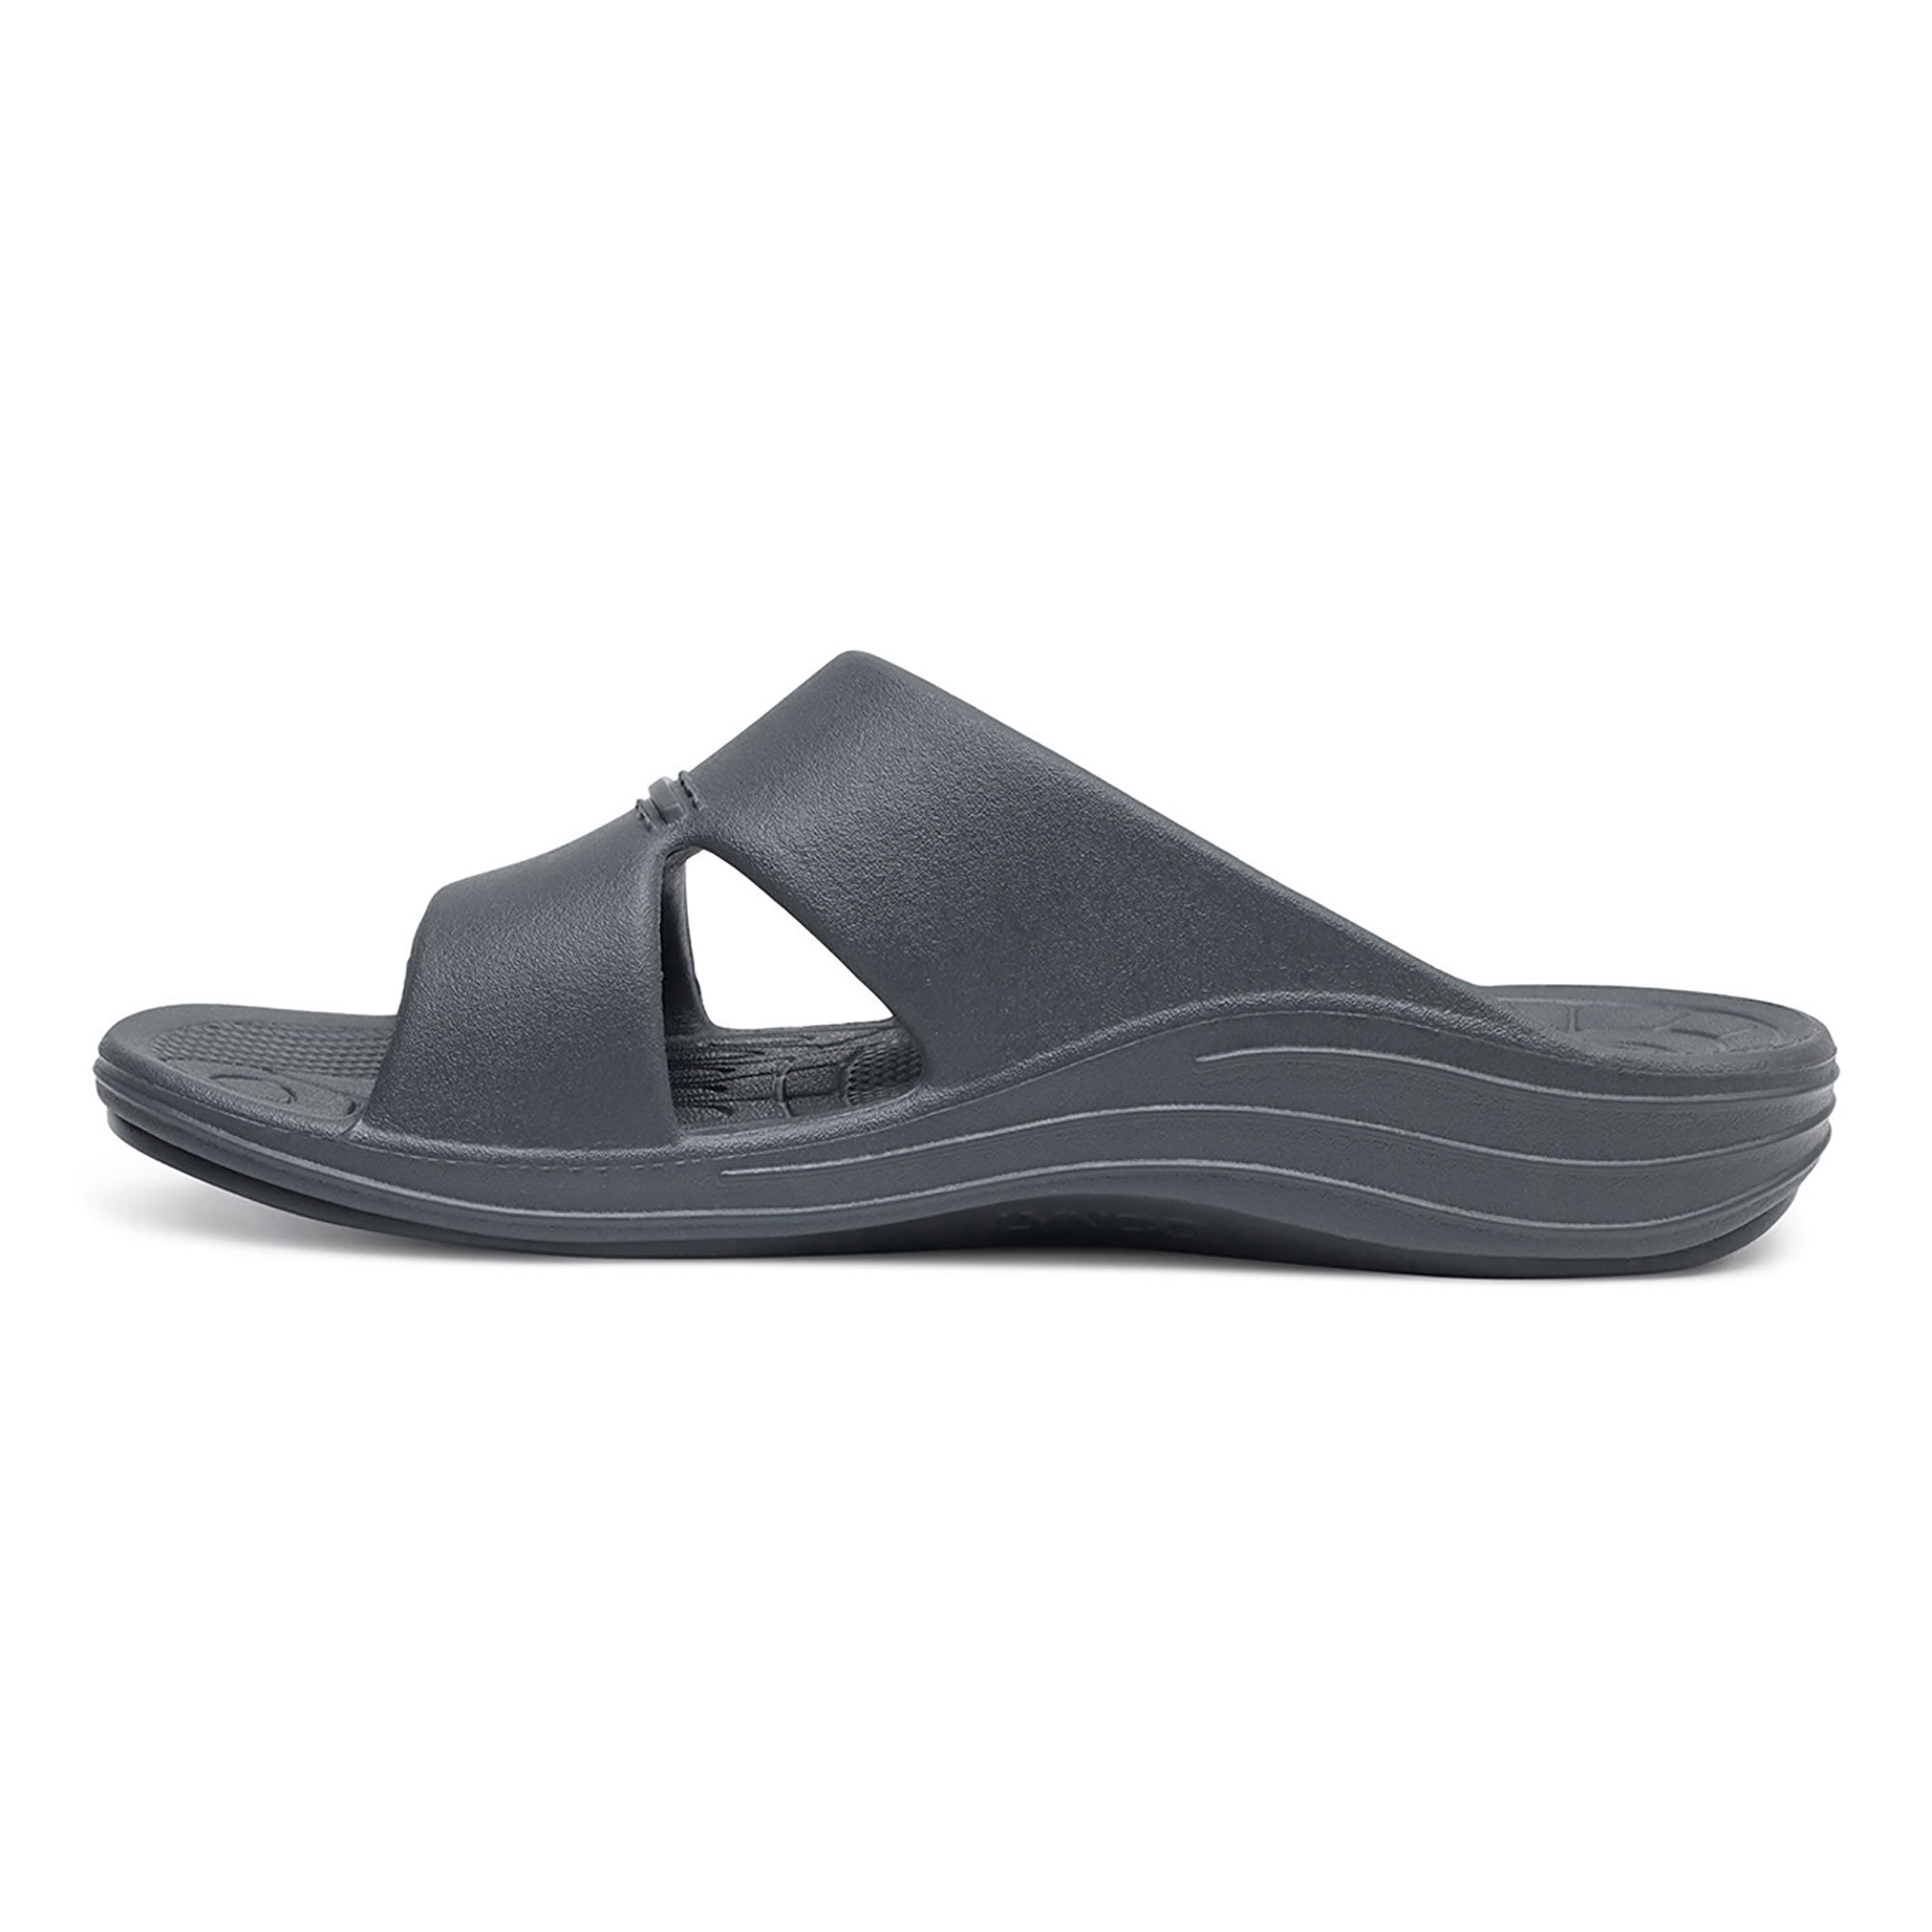 aetrex men's sandals